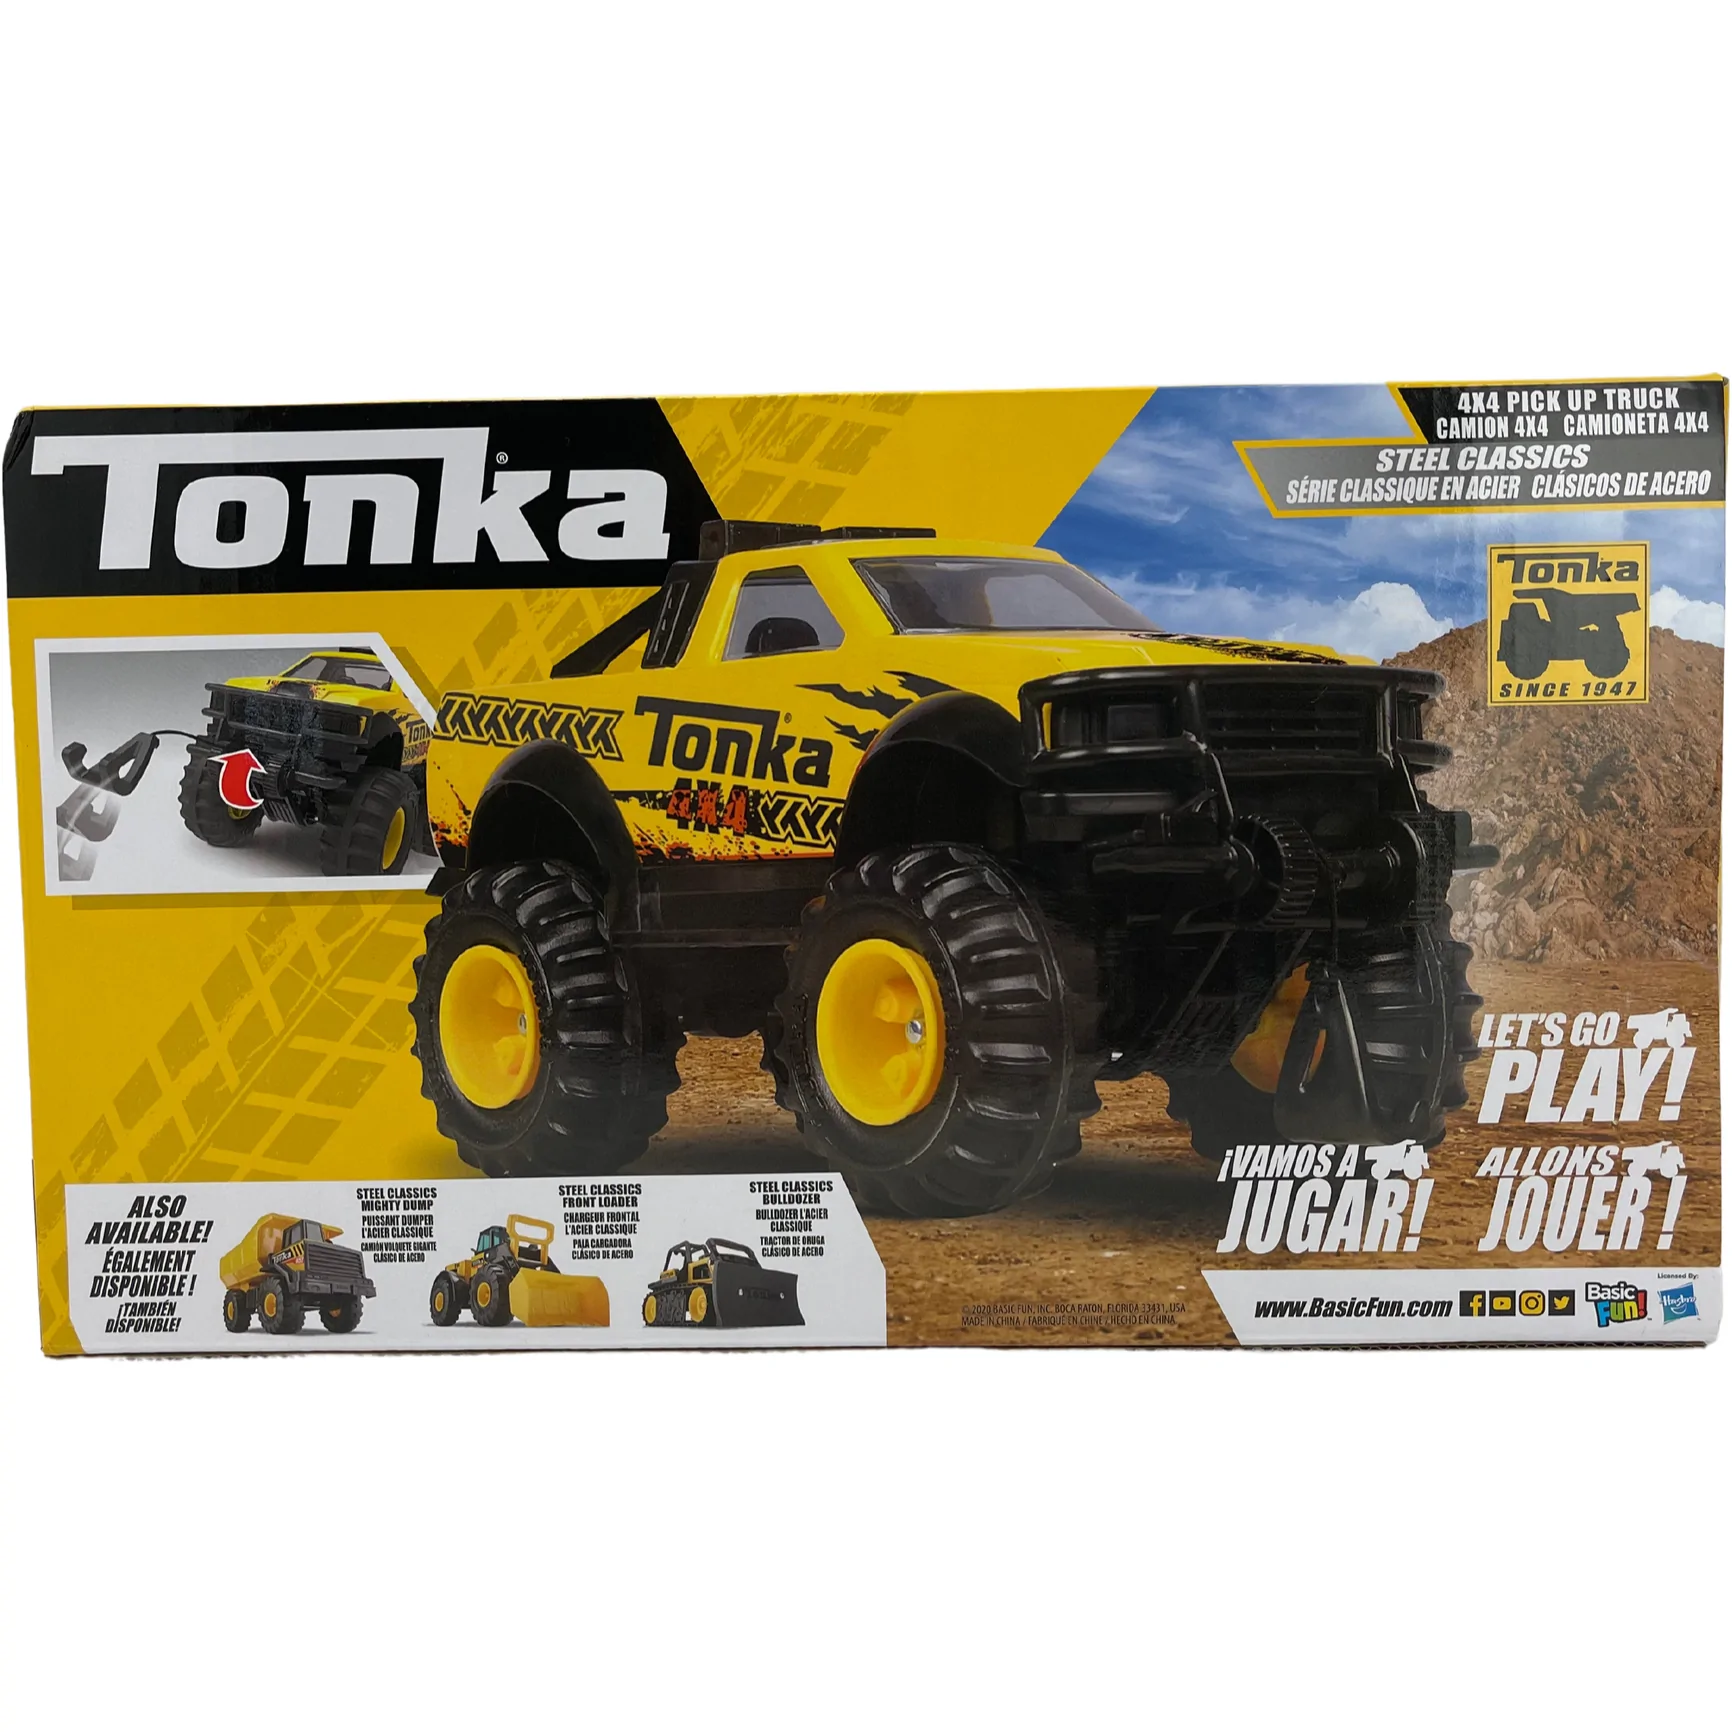 Tonka Metal Pick Up Truck Toy / Yellow & Black / Steel Classics / Off Roading Truck